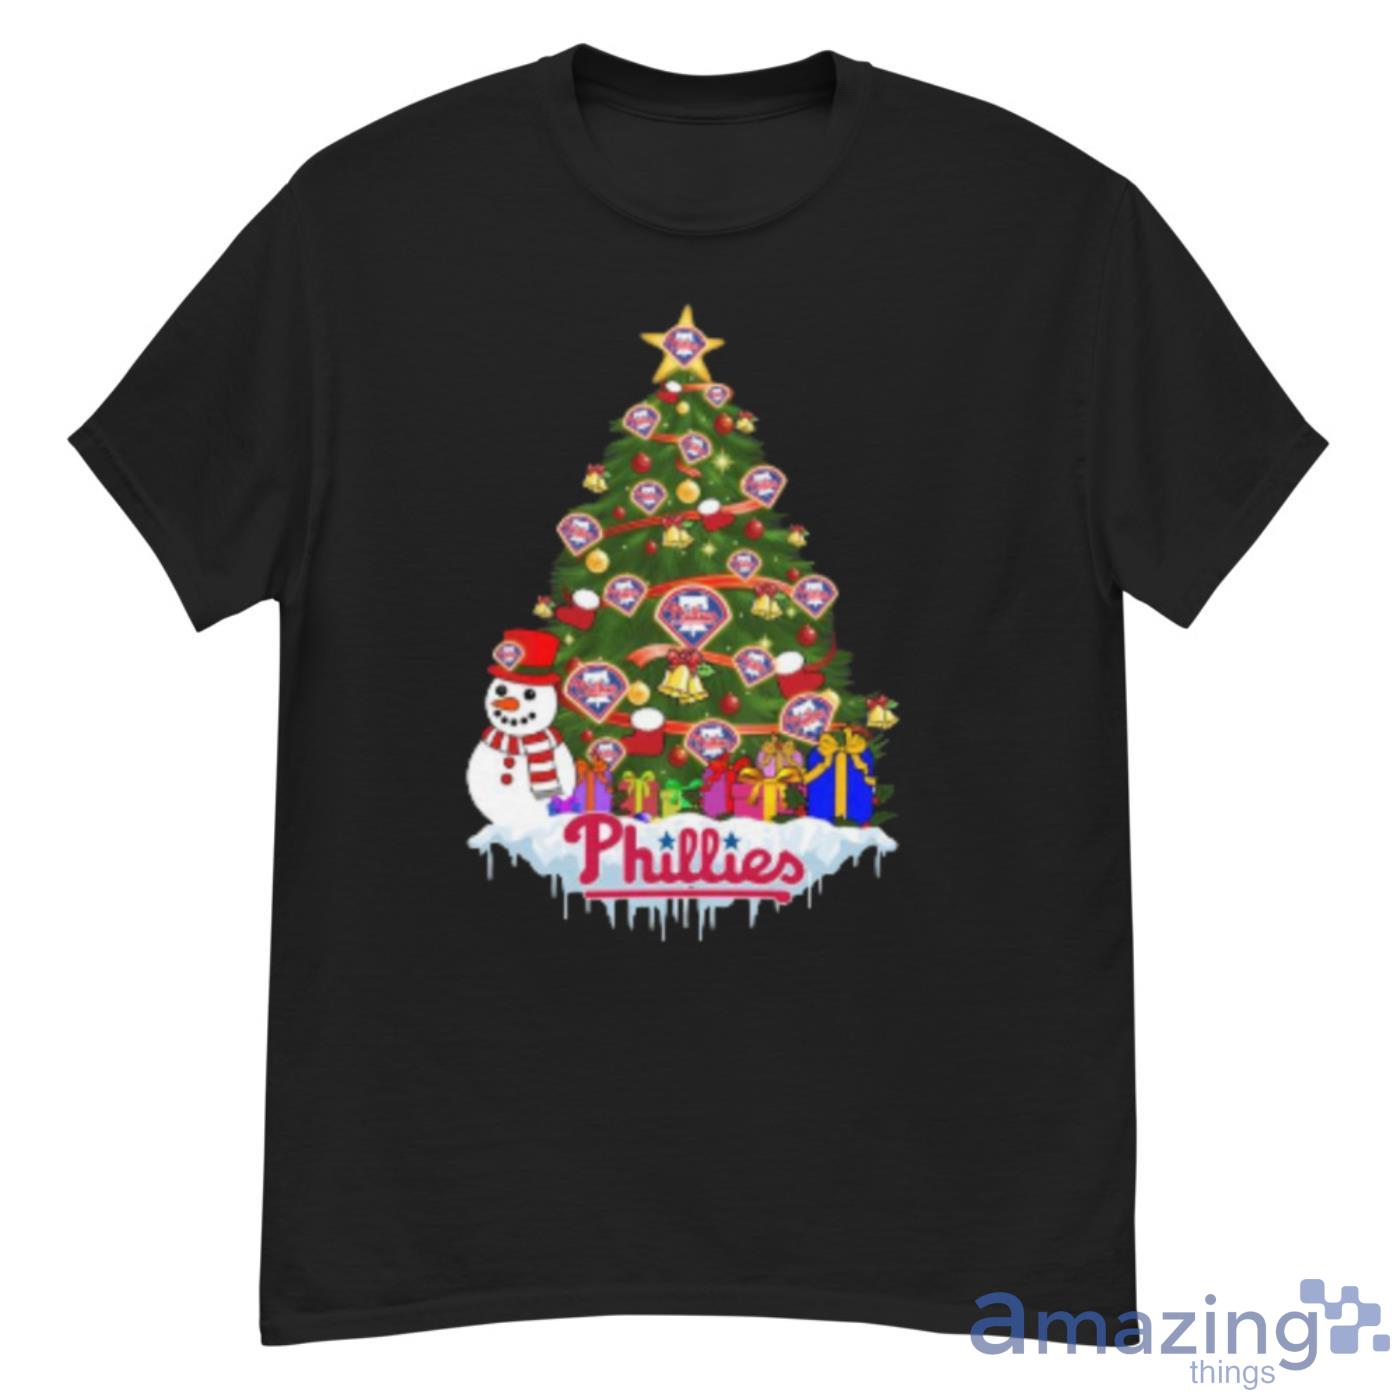 Philadelphia Phillies Merry Christmas MLB Baseball Sports Shirt - G500 Men’s Classic T-Shirt